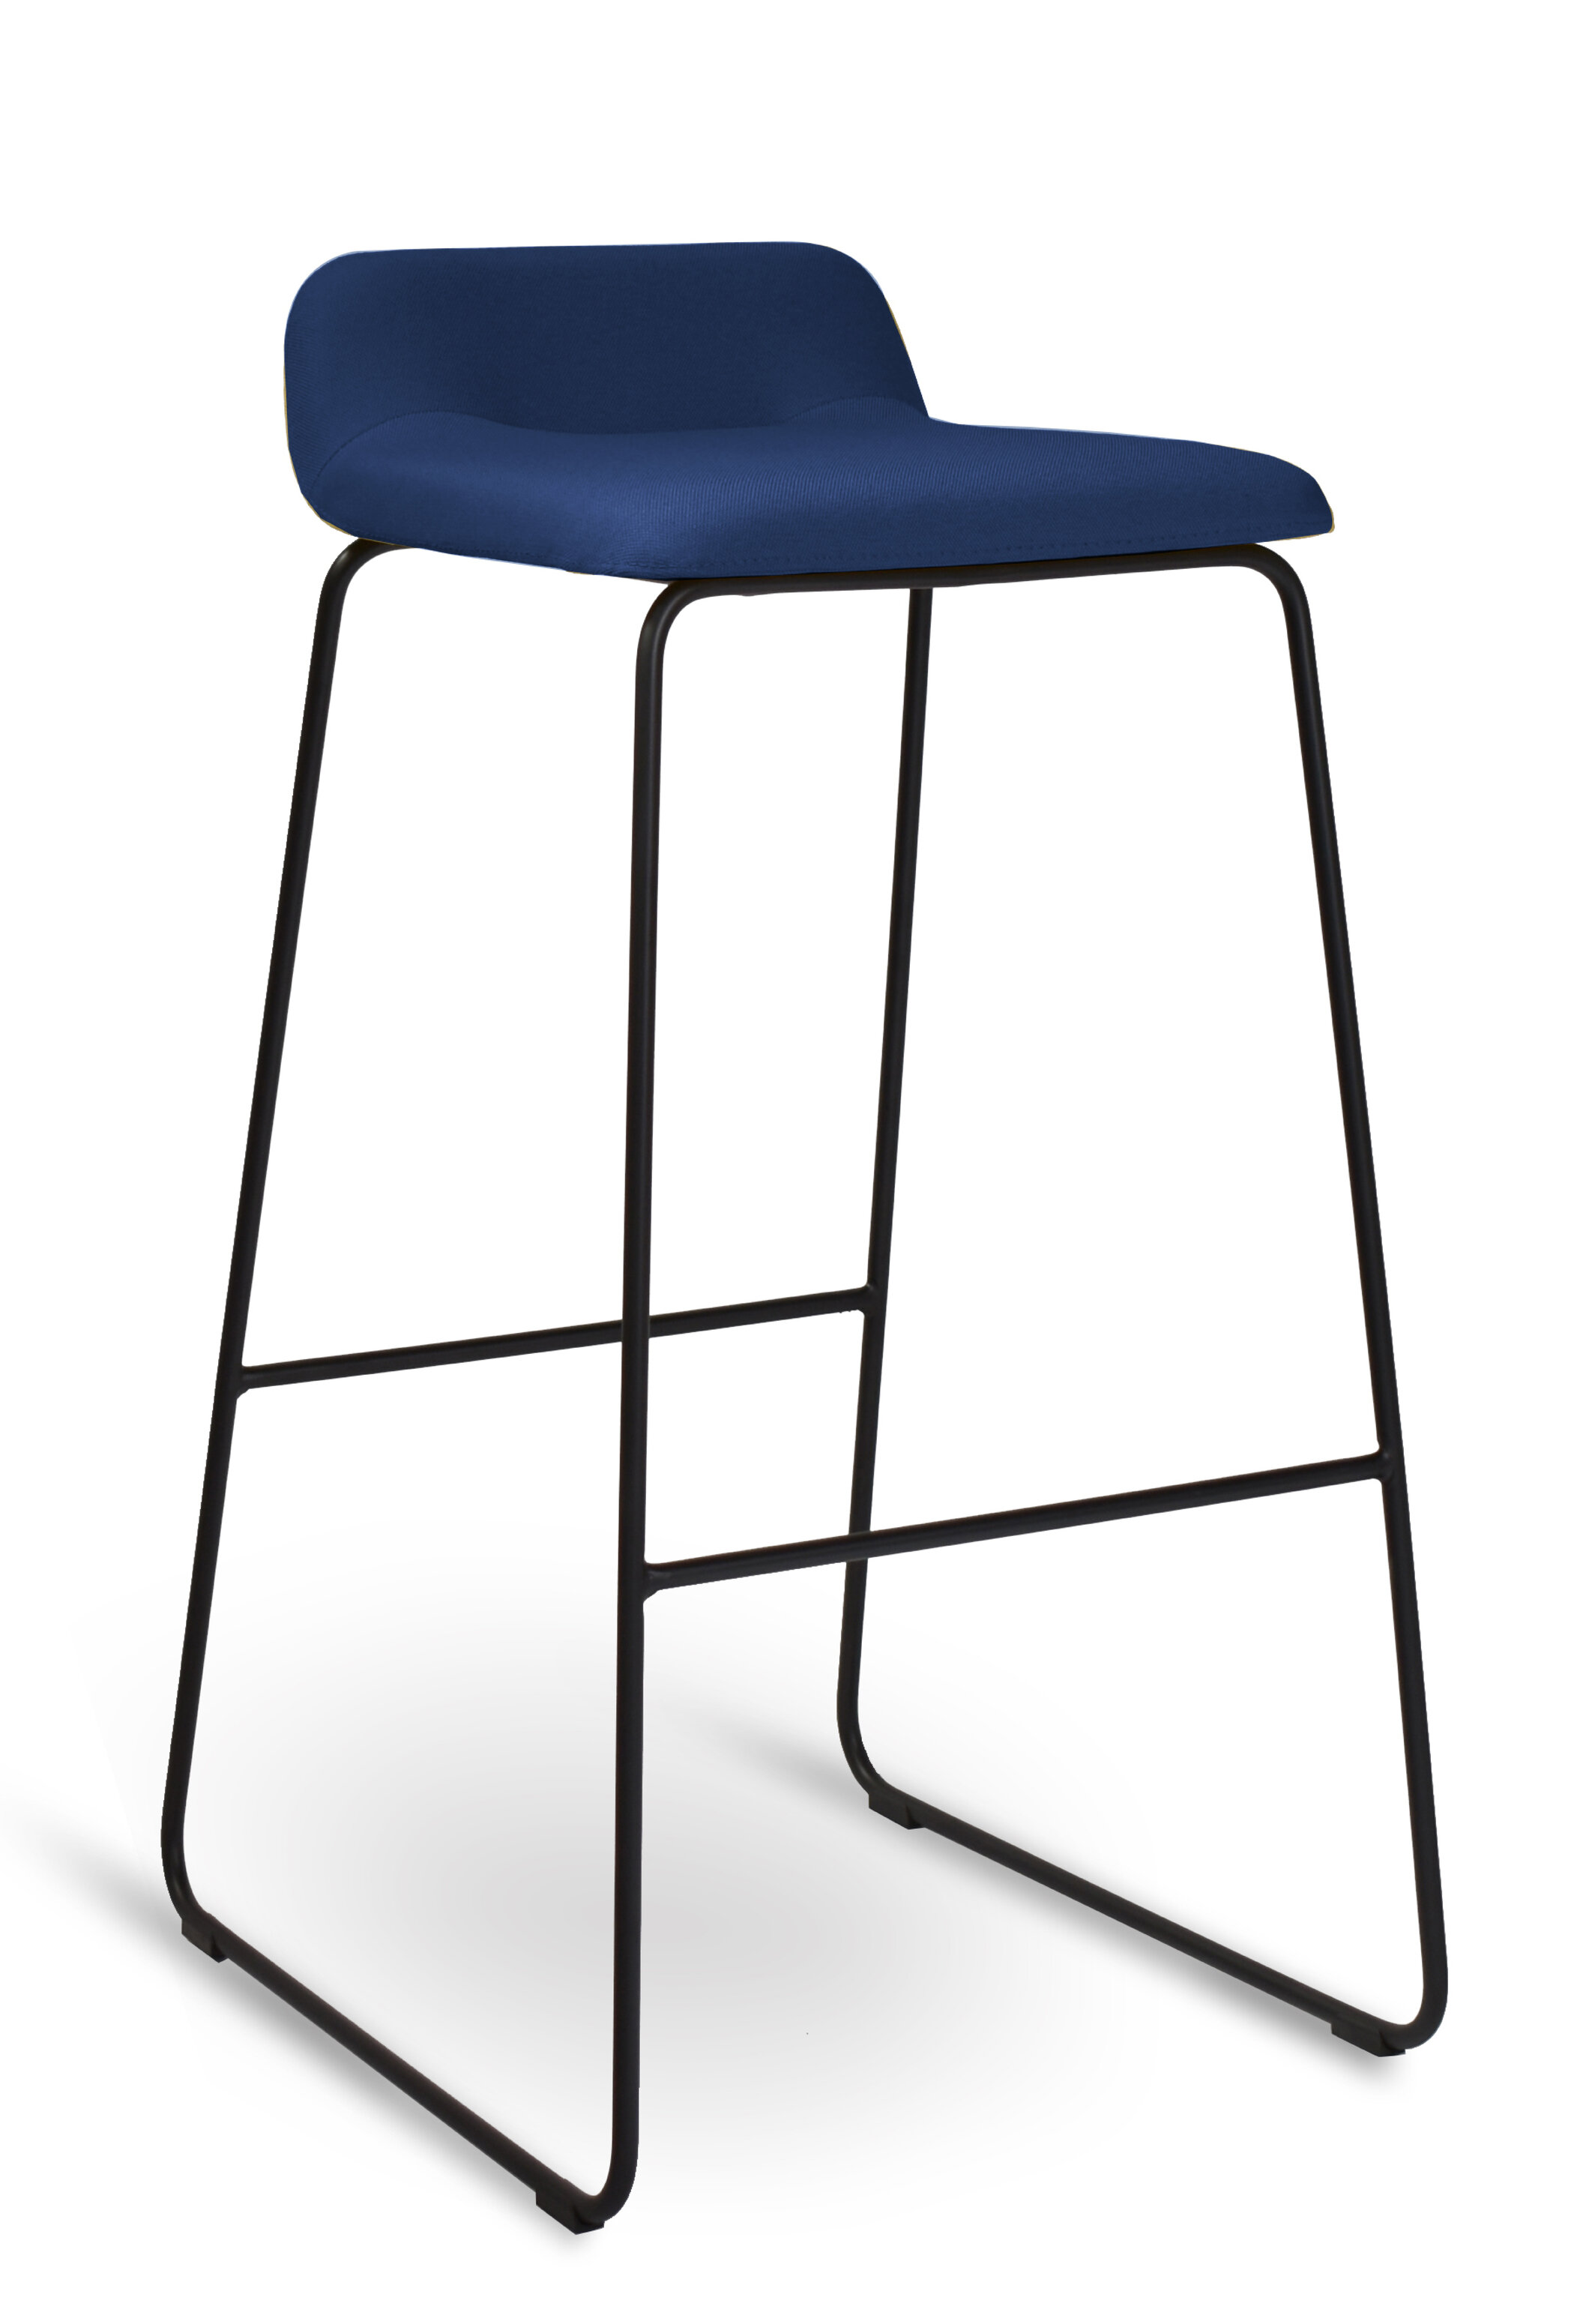 WS - Lolli high stool - ERA CSE40 MATURITY